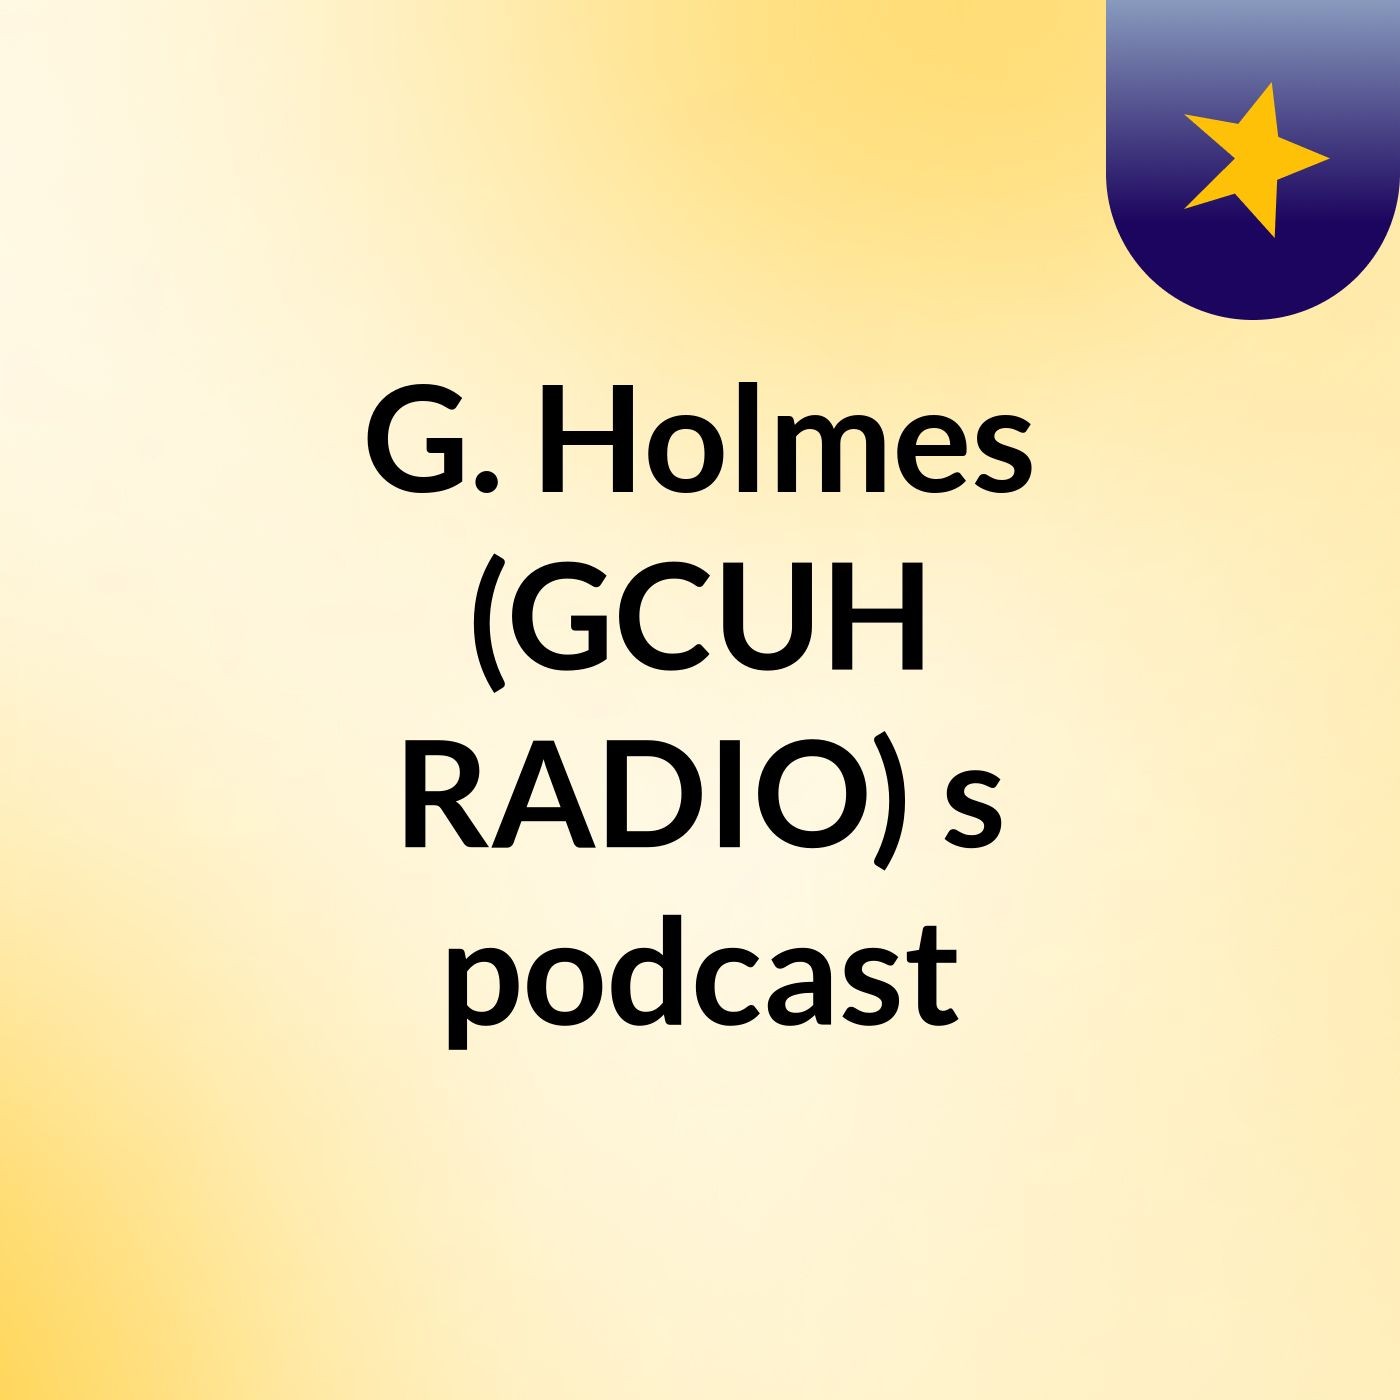 Episode 2 - G. Holmes (GCUH RADIO)'s podcast